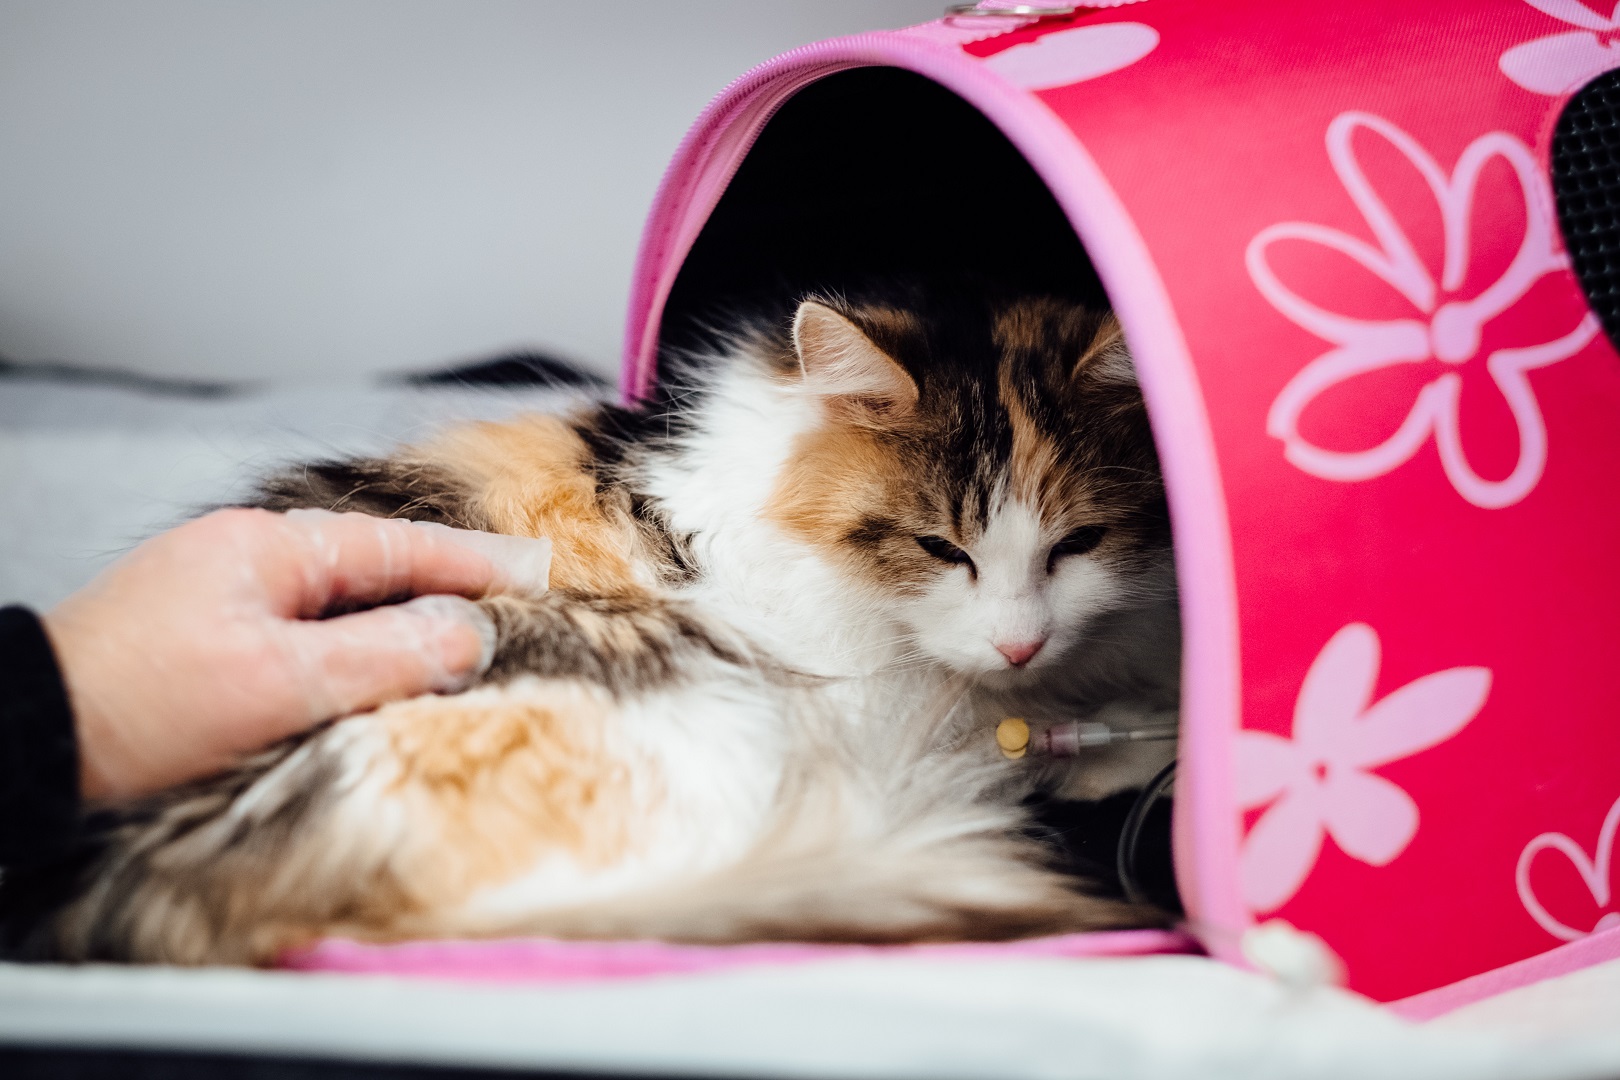 Kenali Ciri-ciri Kucing Sakit dan Cara Mengatasinya, Jangan Sampai Telat Atau Anda Bakal Menyesal!